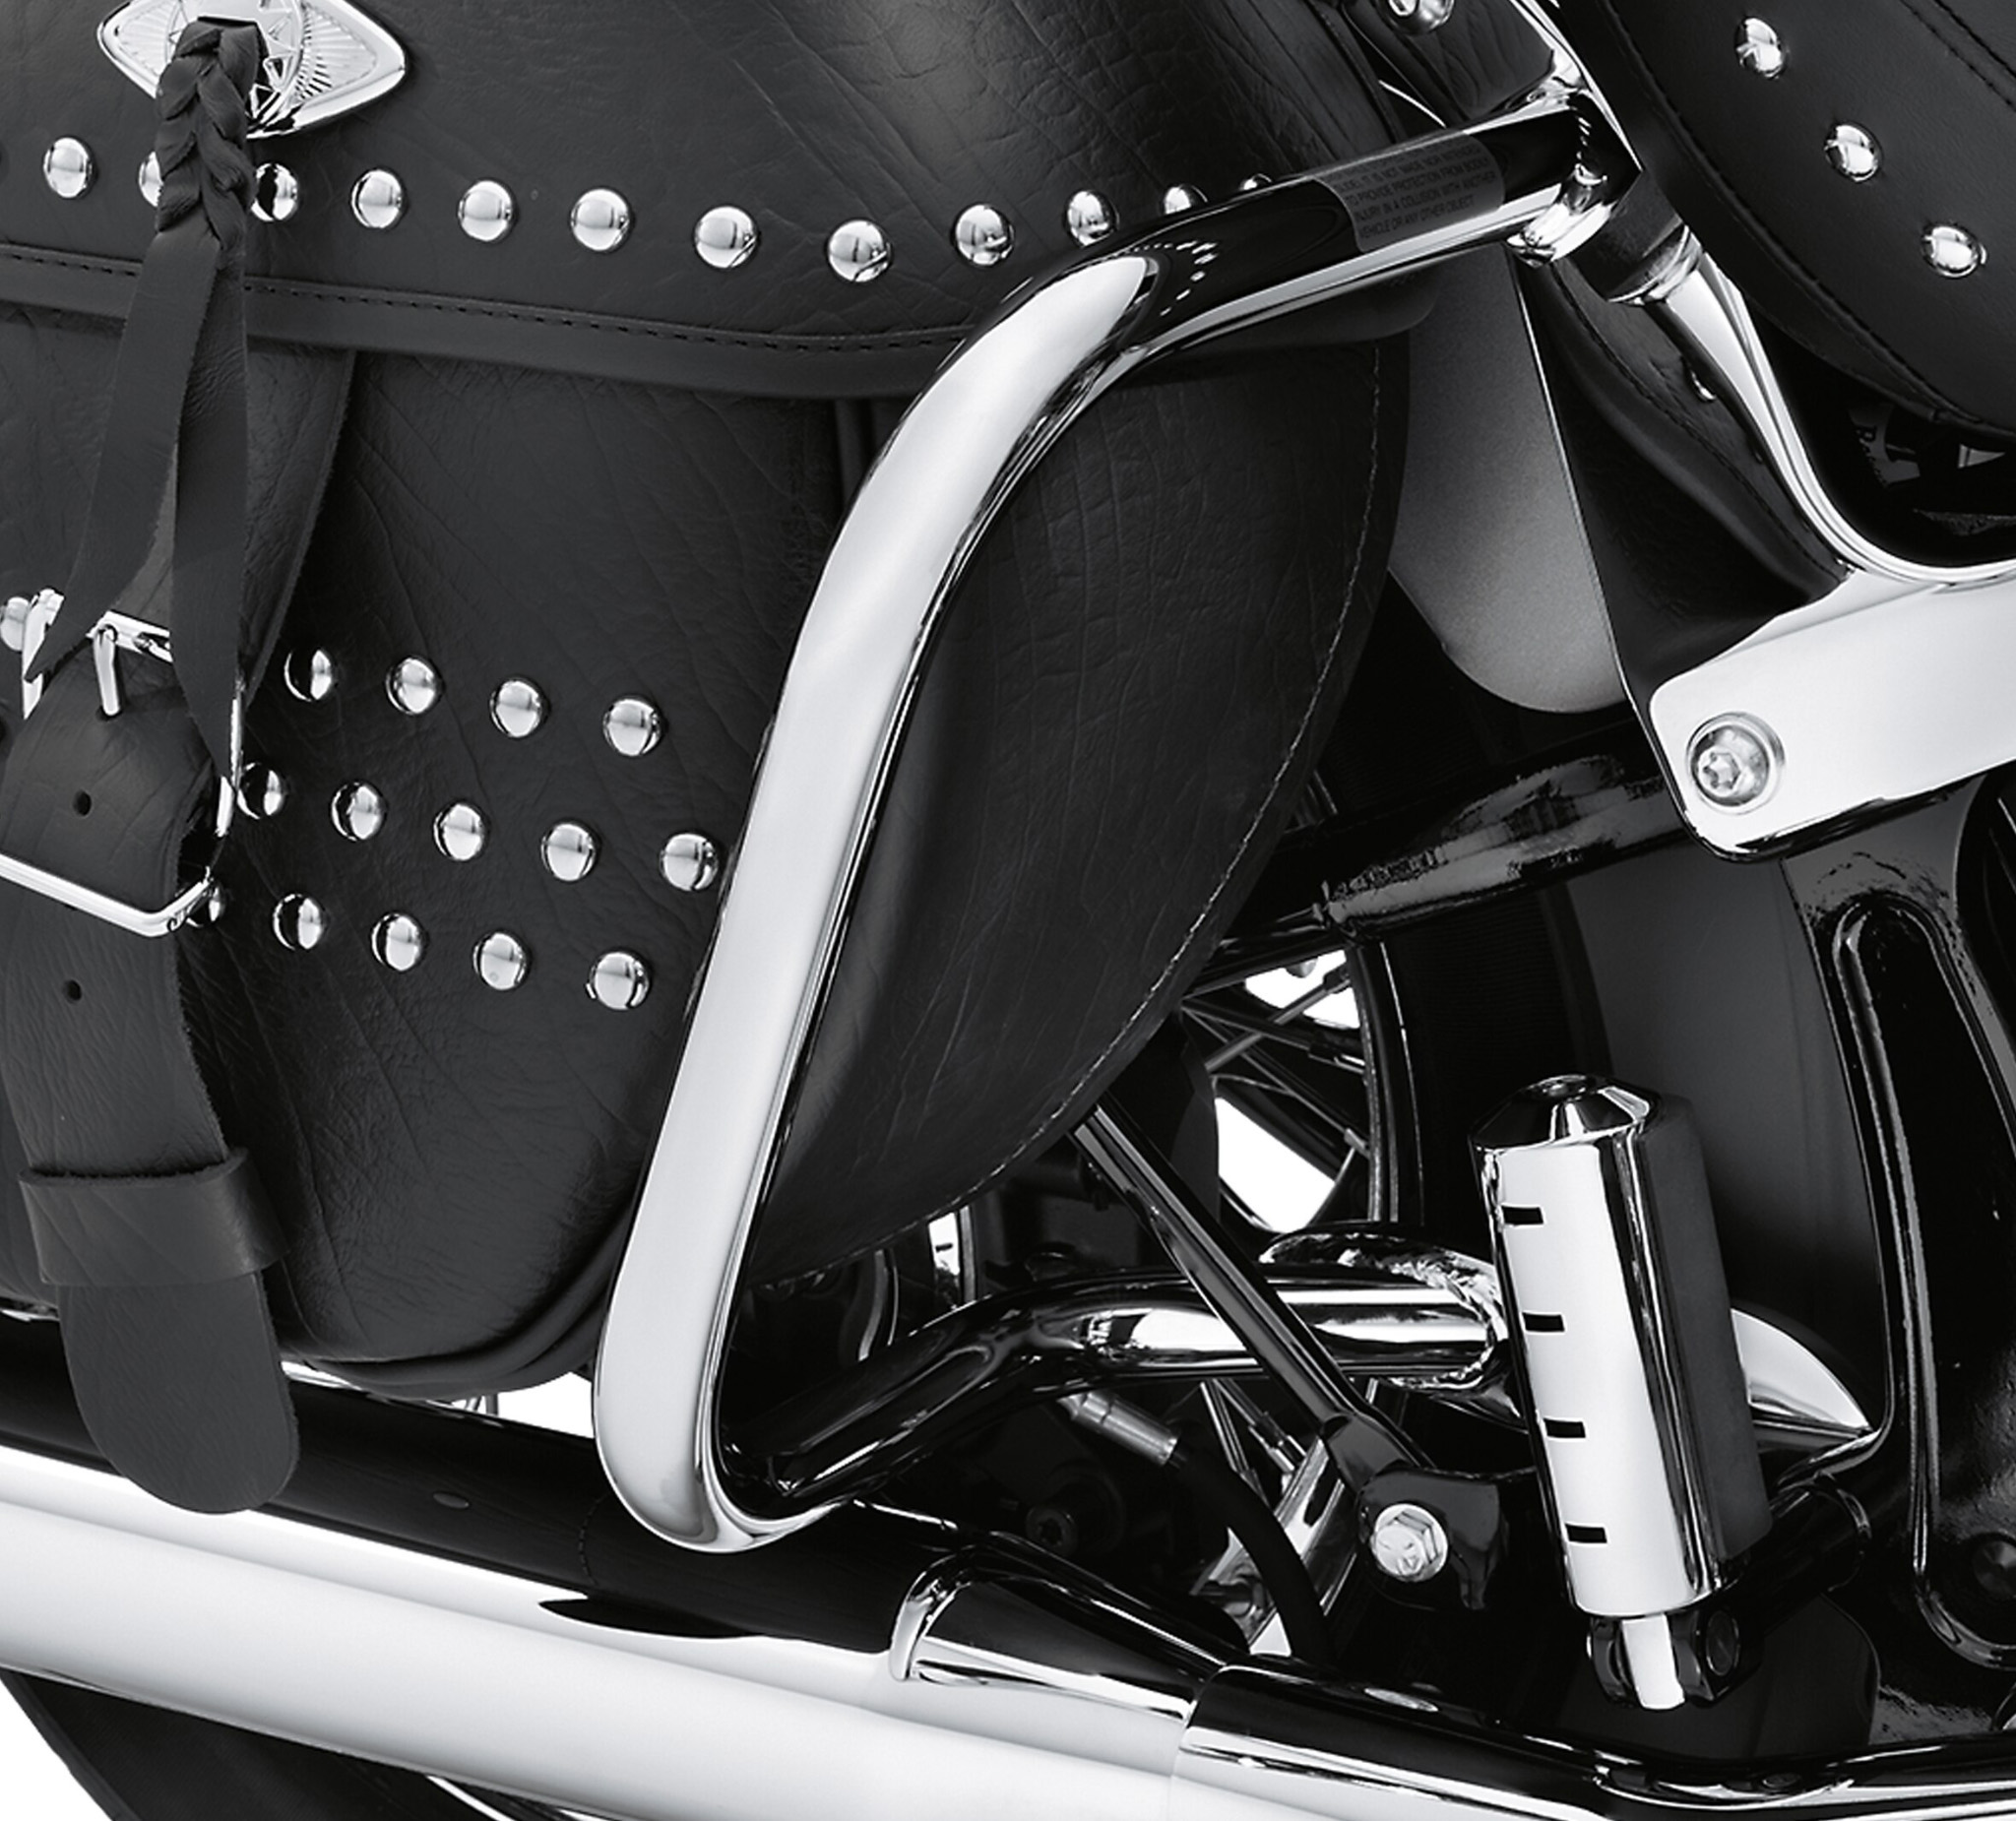 Harley Davidson Saddlebag Guard Top Sellers, 52% OFF |  www.ingeniovirtual.com